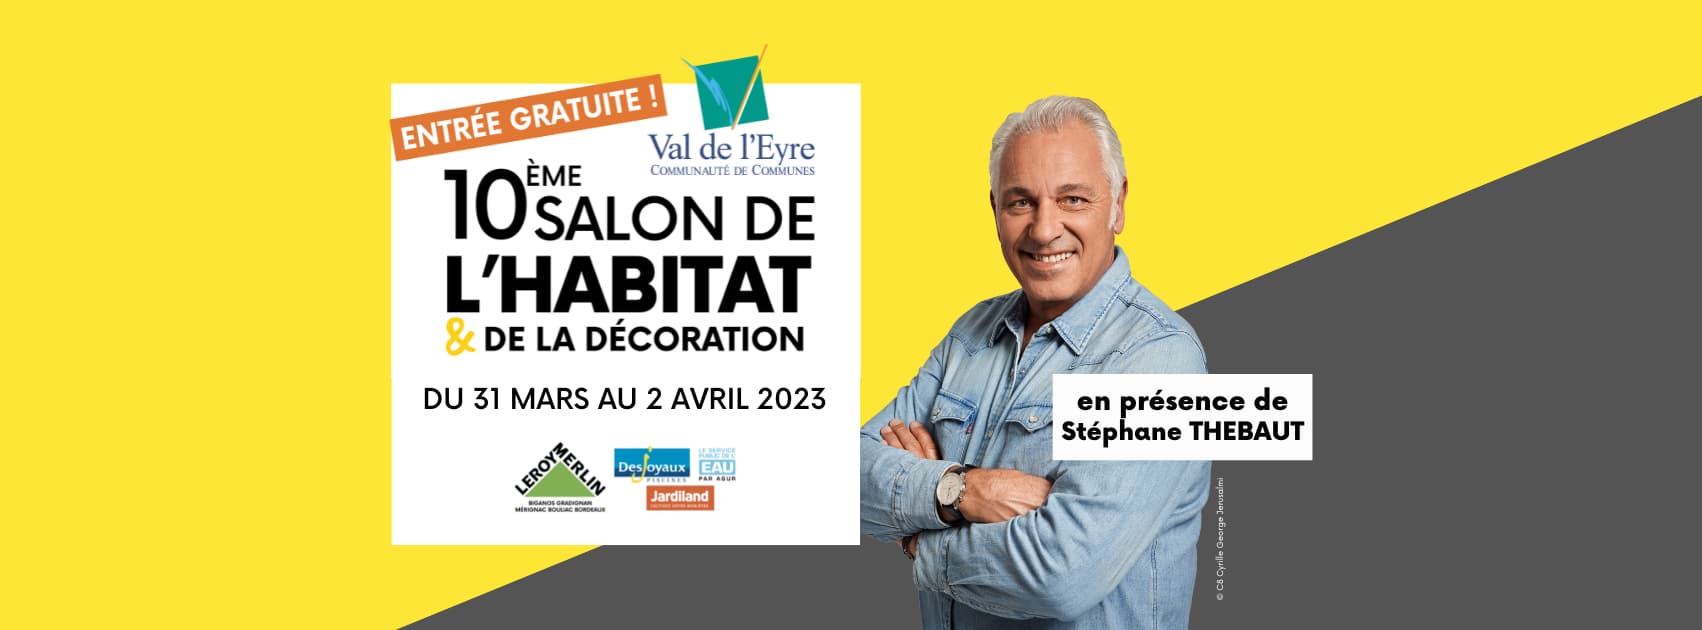 Salon de l'habitat 2023 - Val de l'Eyre Le Barp